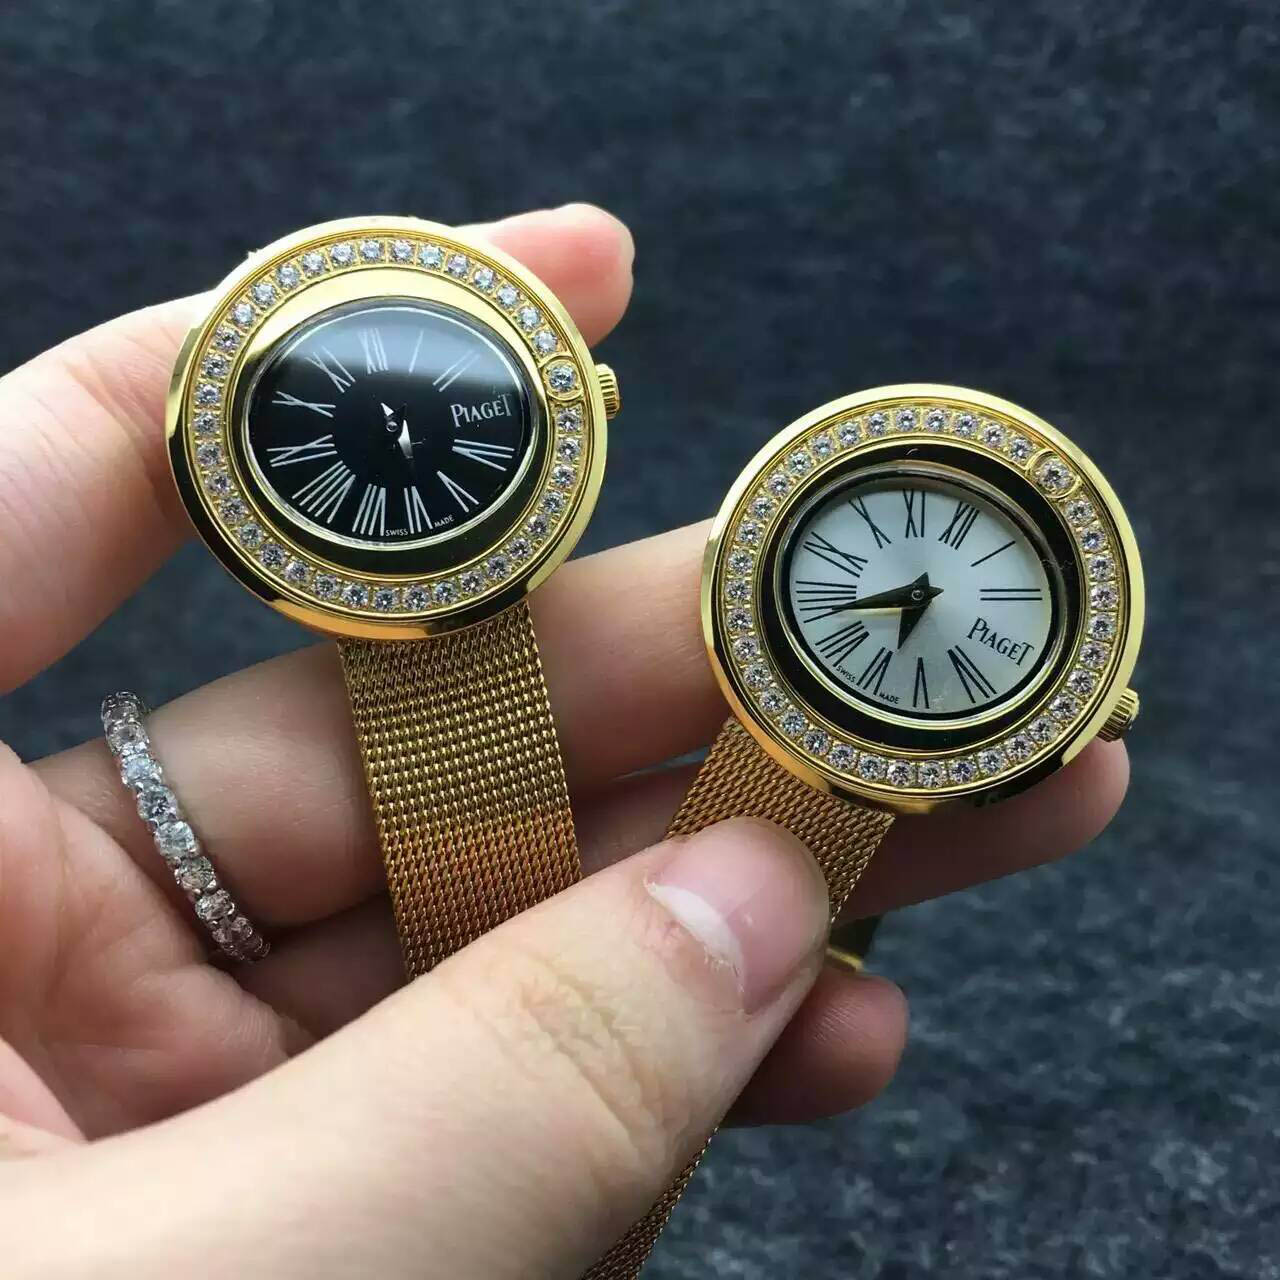 3A伯爵 - PIAGET 女士腕錶 錶殼采用361精鋼